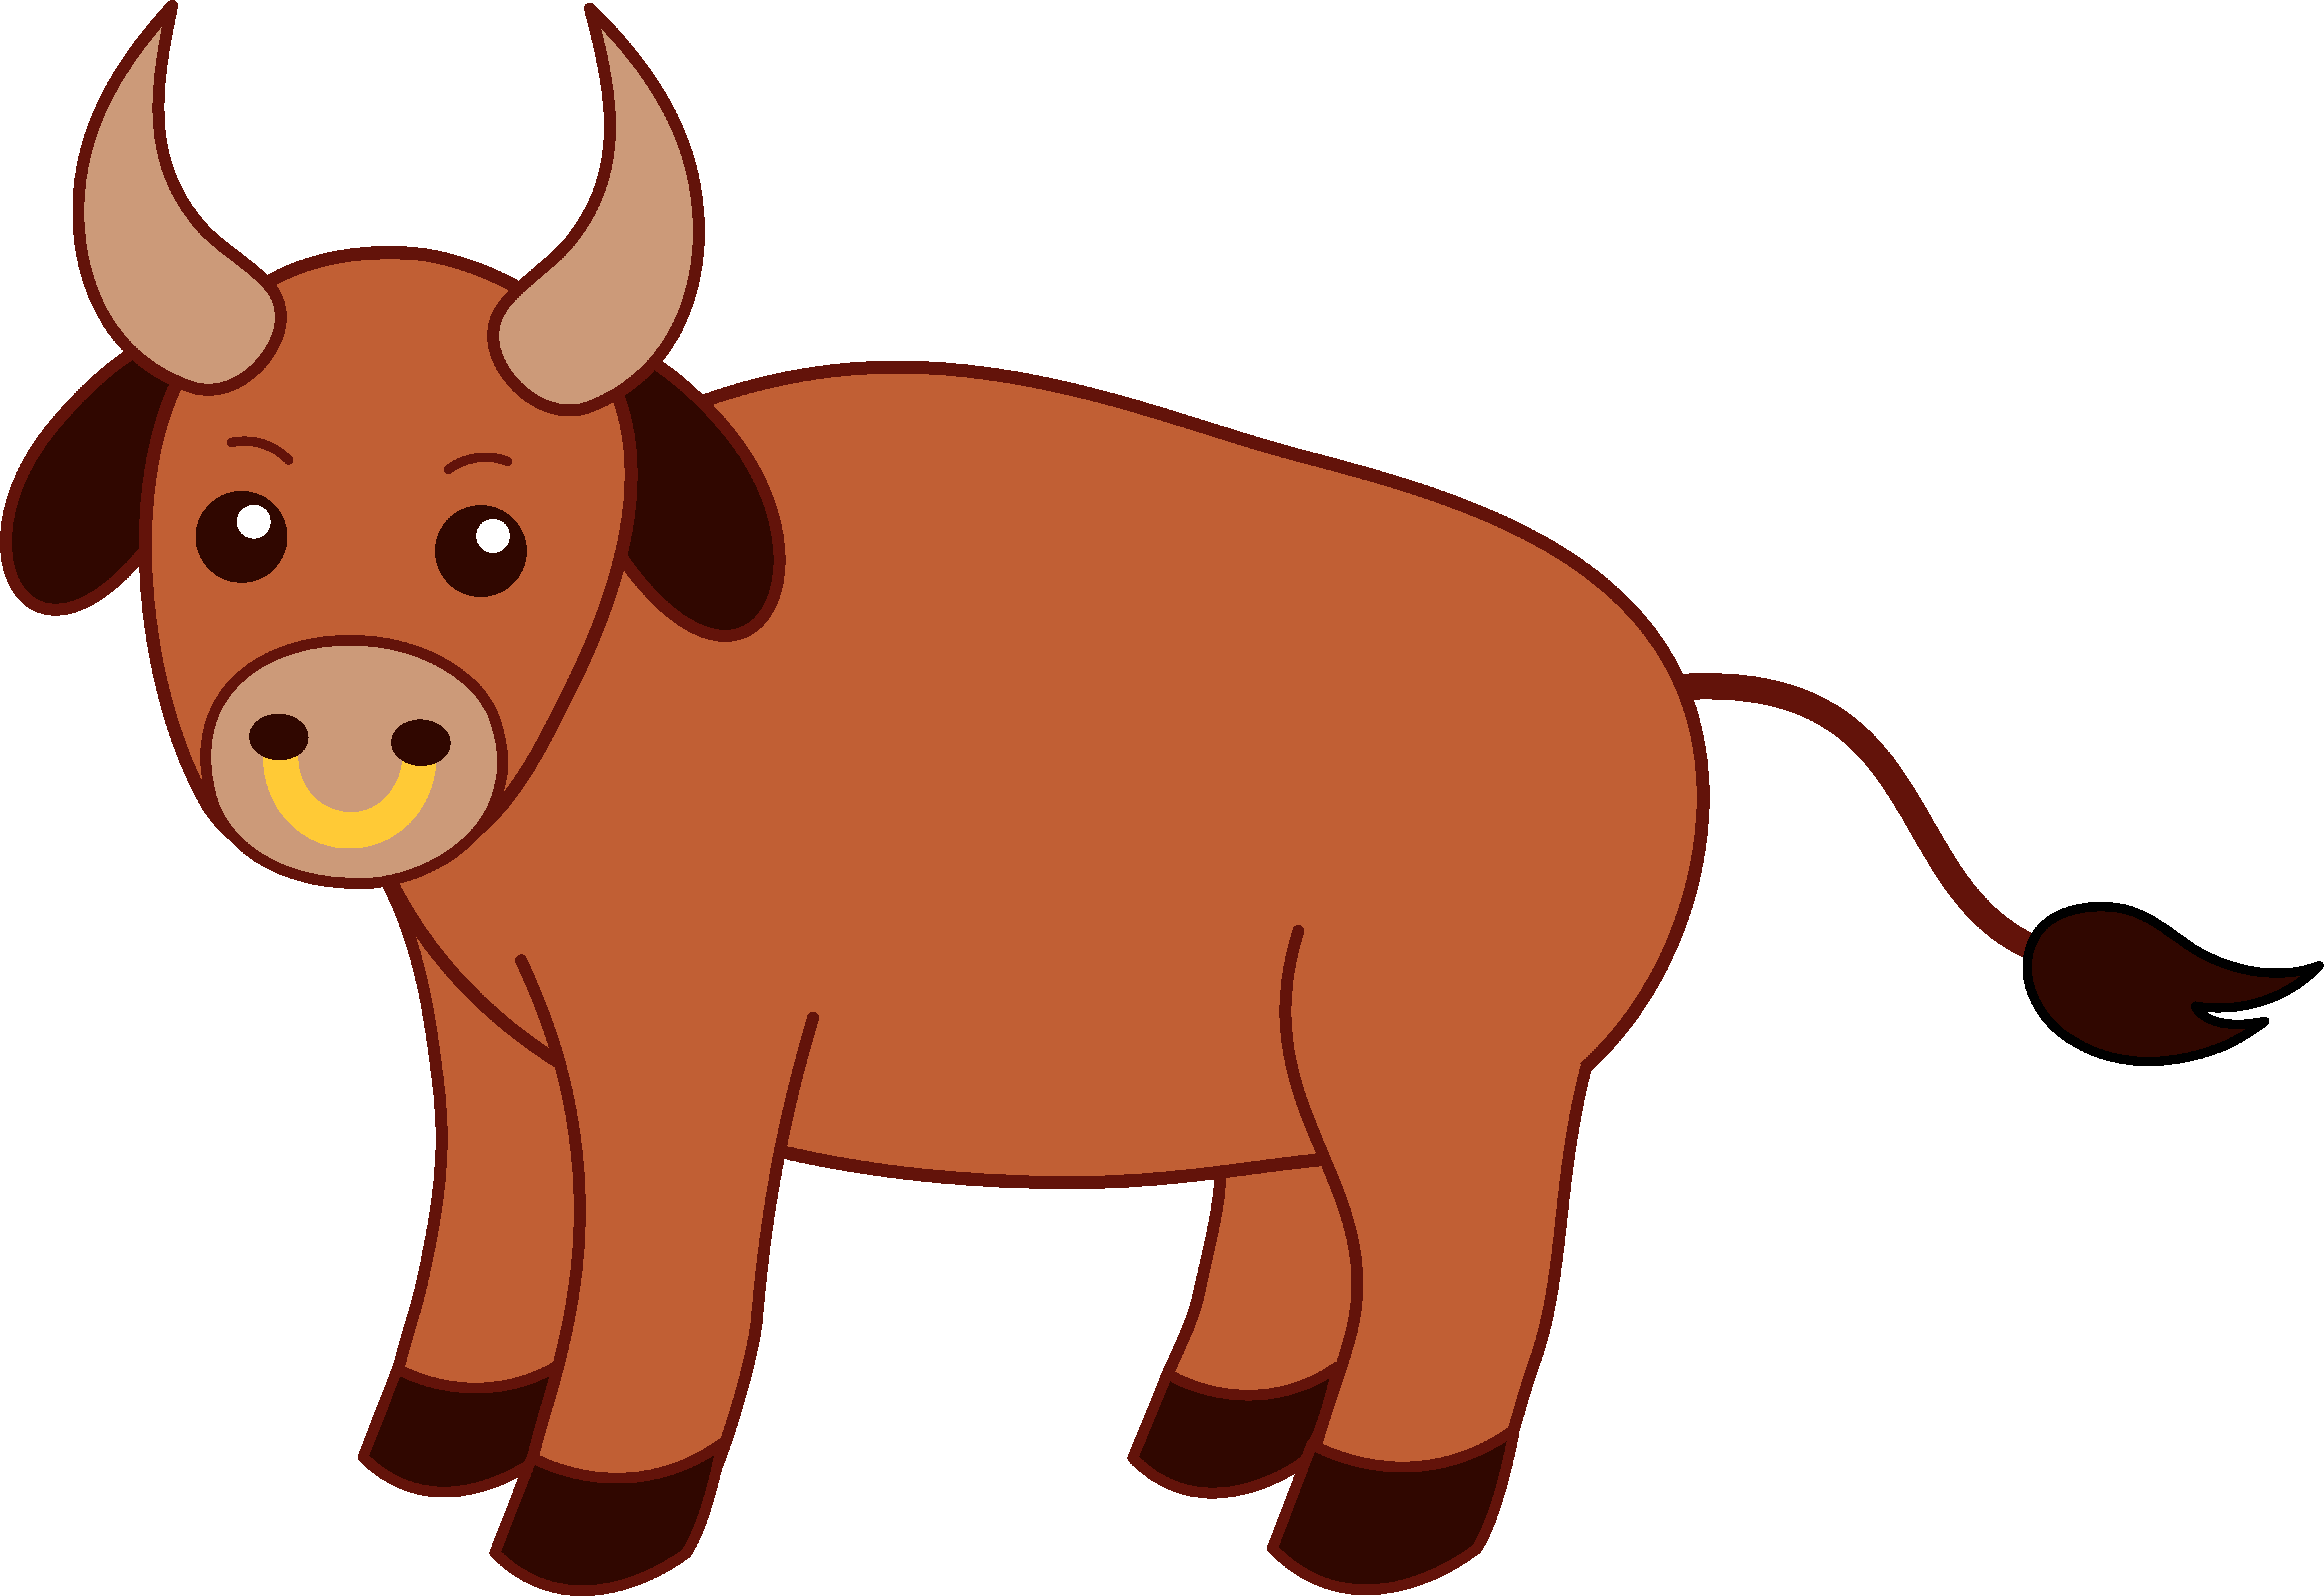 Buffalo clipart kid. Bull sensational design cute